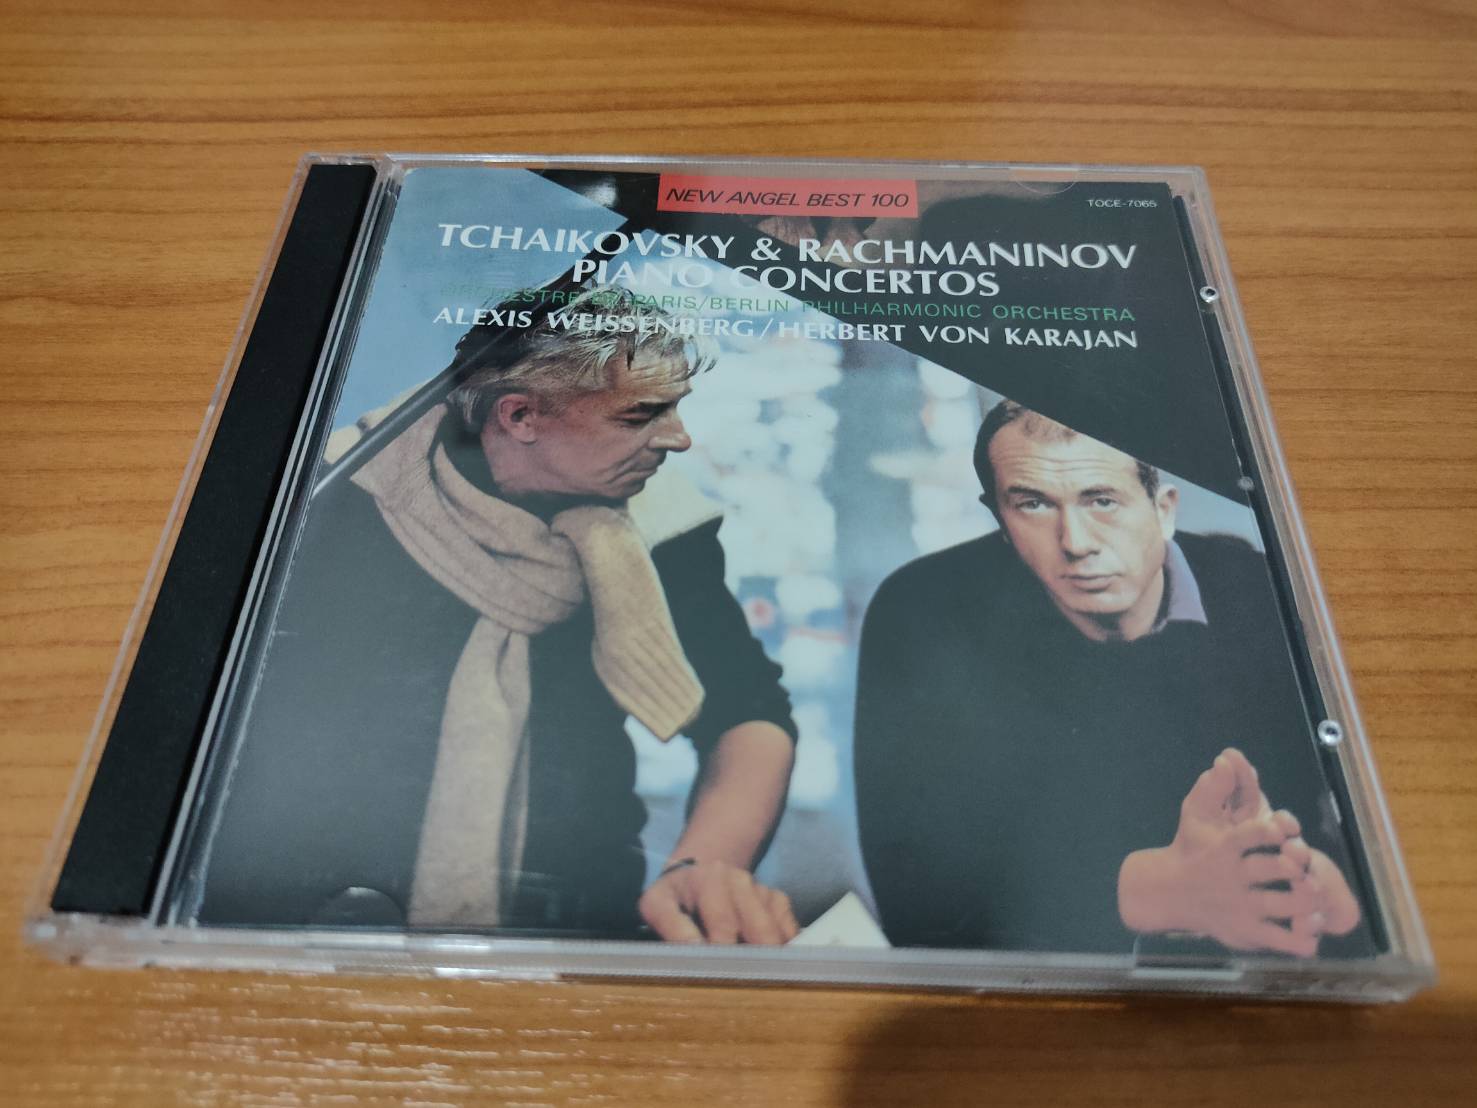 CD.MUSIC ซีดีเพลง เพลงสากล Tchaikovsky & Rachmaninov**มีเเค่แผ่นเดียว (***โปรดดูภาพสินค้าอย่างละเอียดก่อนทำการสั่งซื้อ*** )